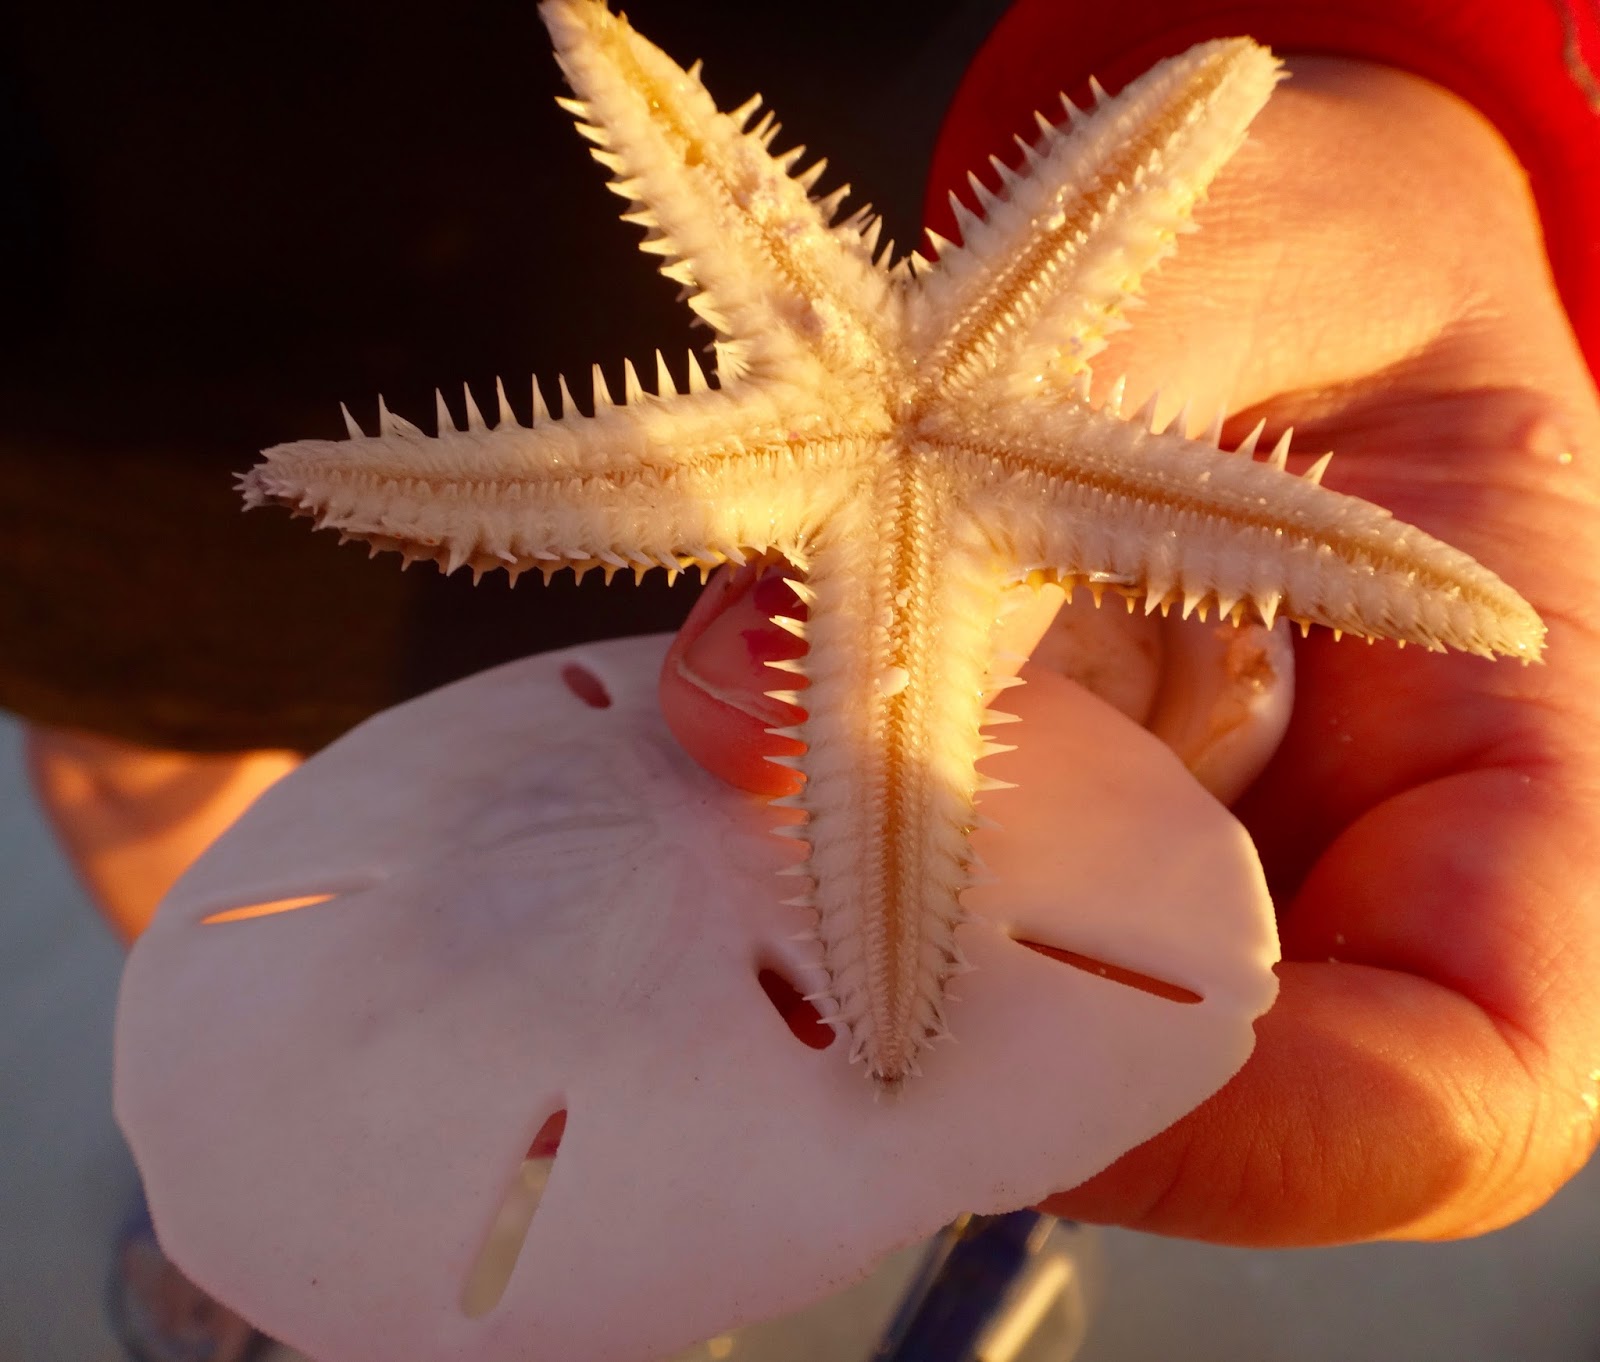 starfish and sand dollar